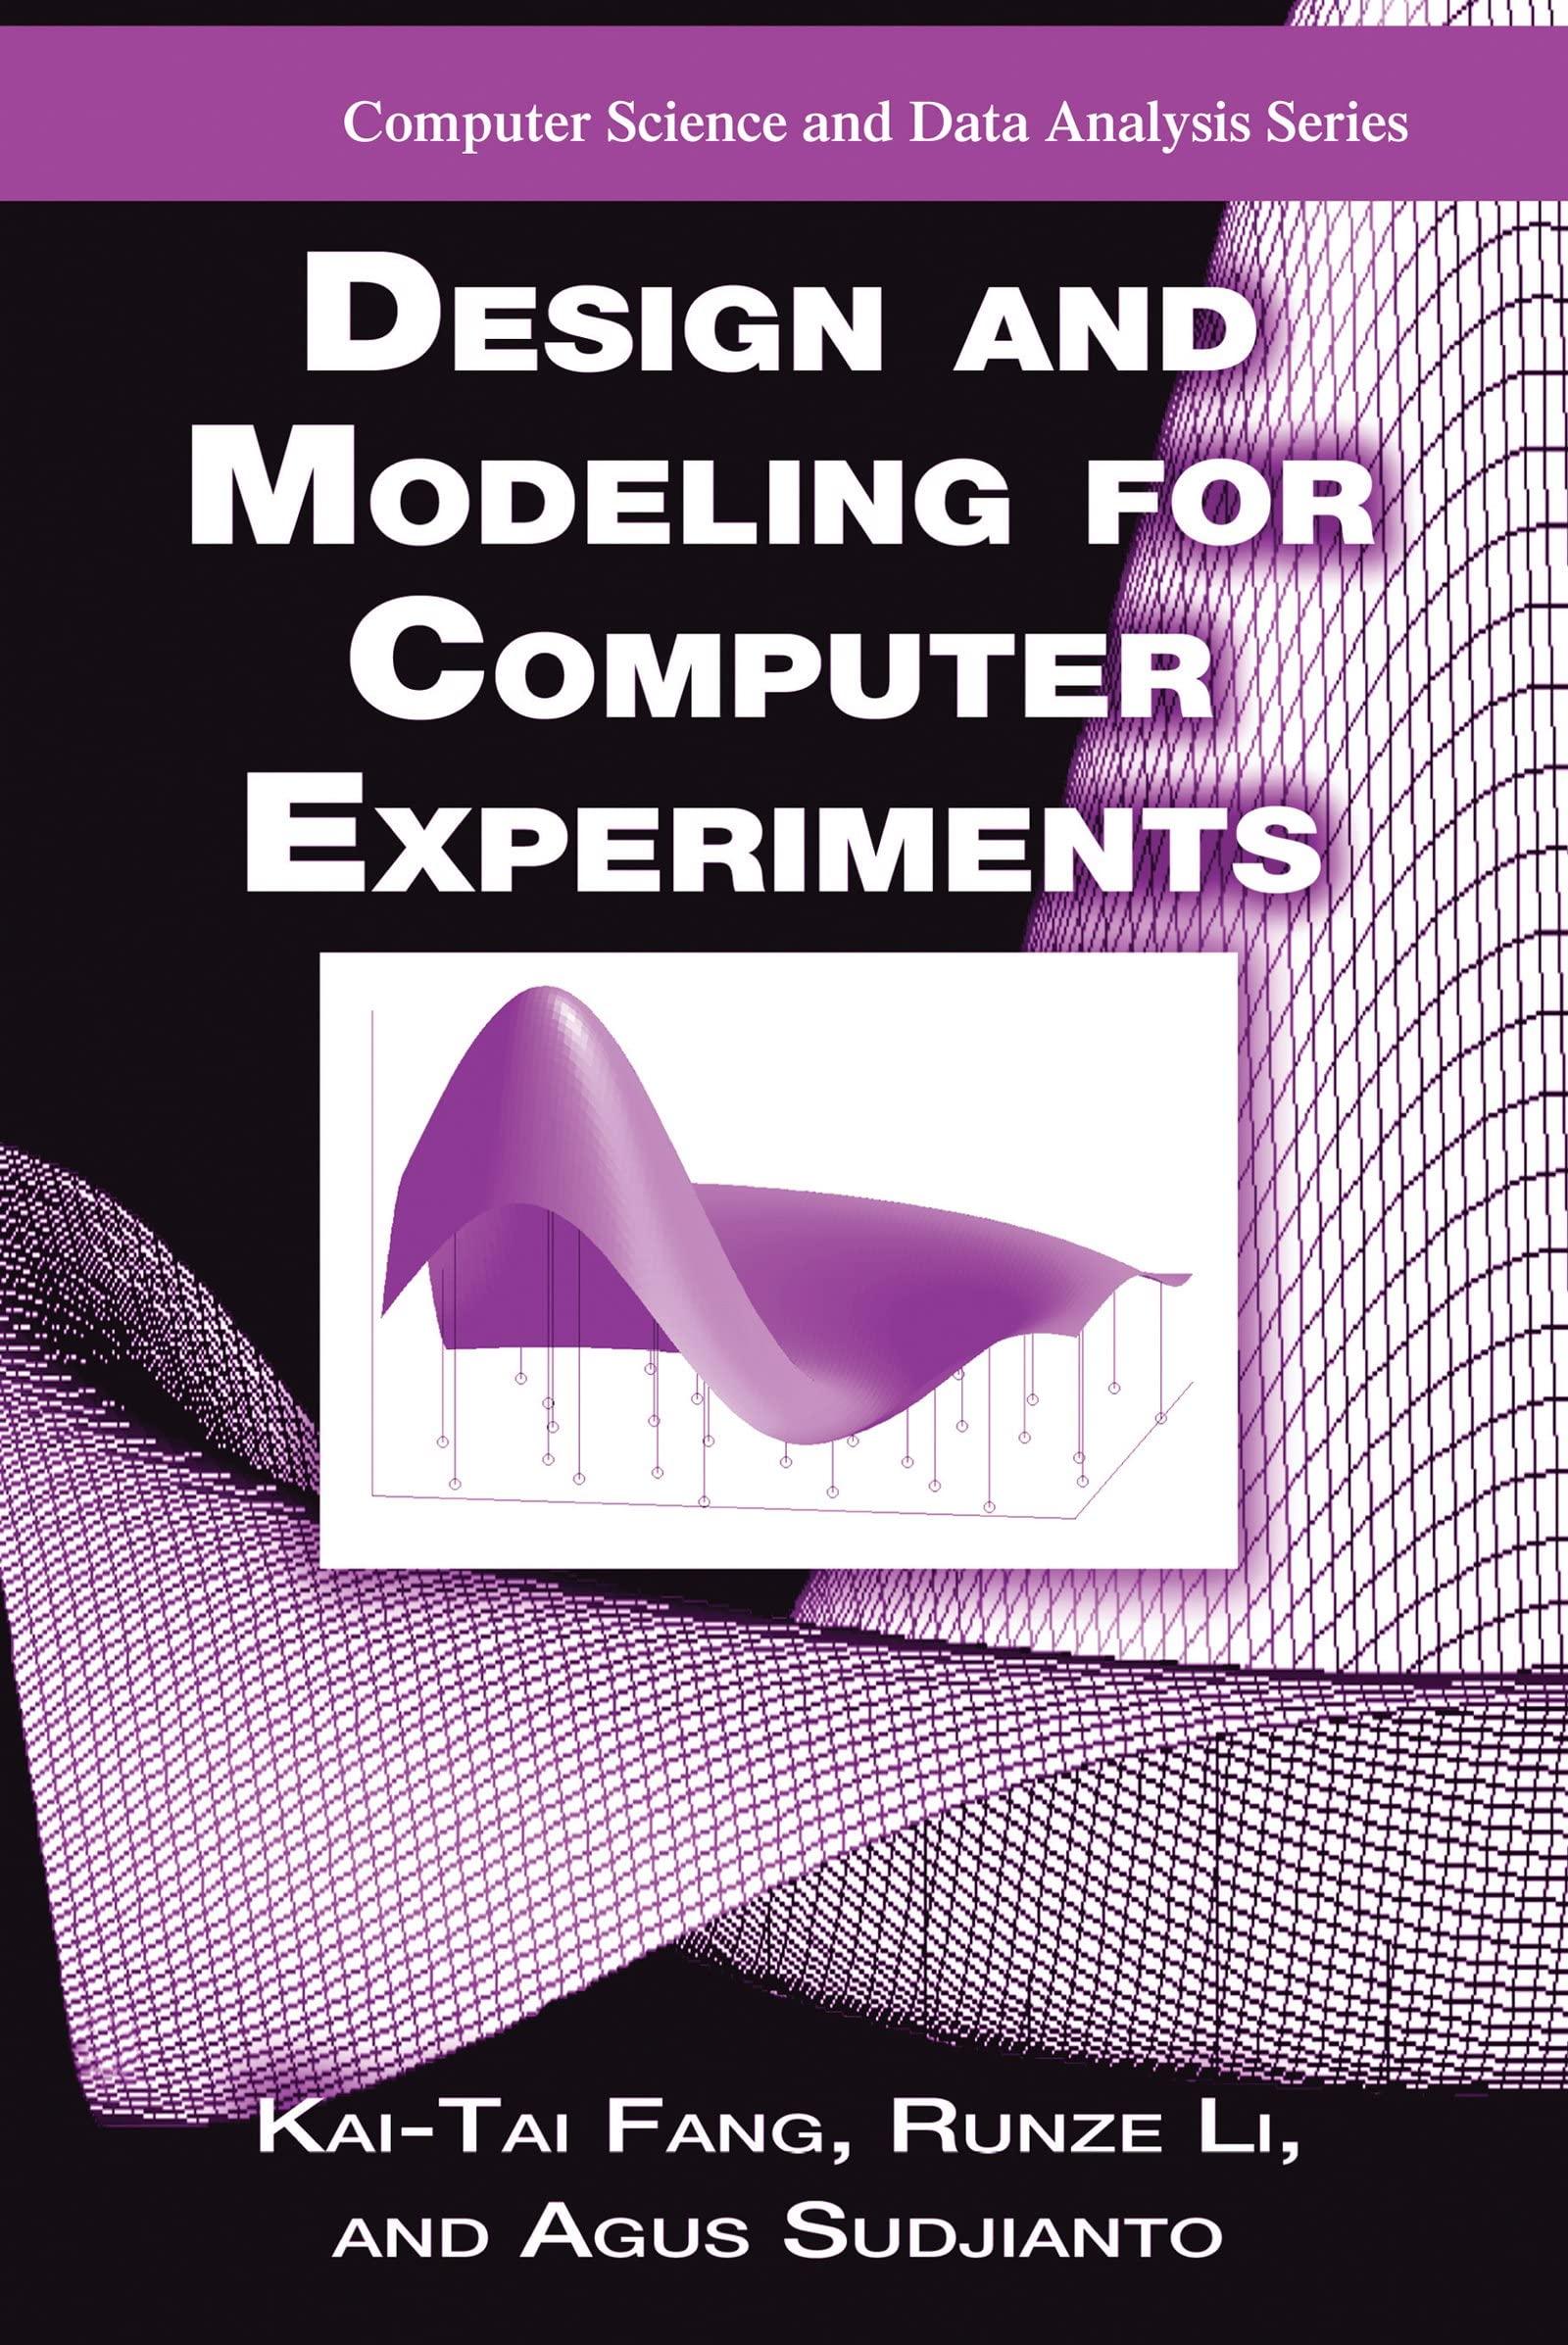 design and modeling for computer experiments 1st edition kai tai fang, runze li, agus sudjianto 036757800x,